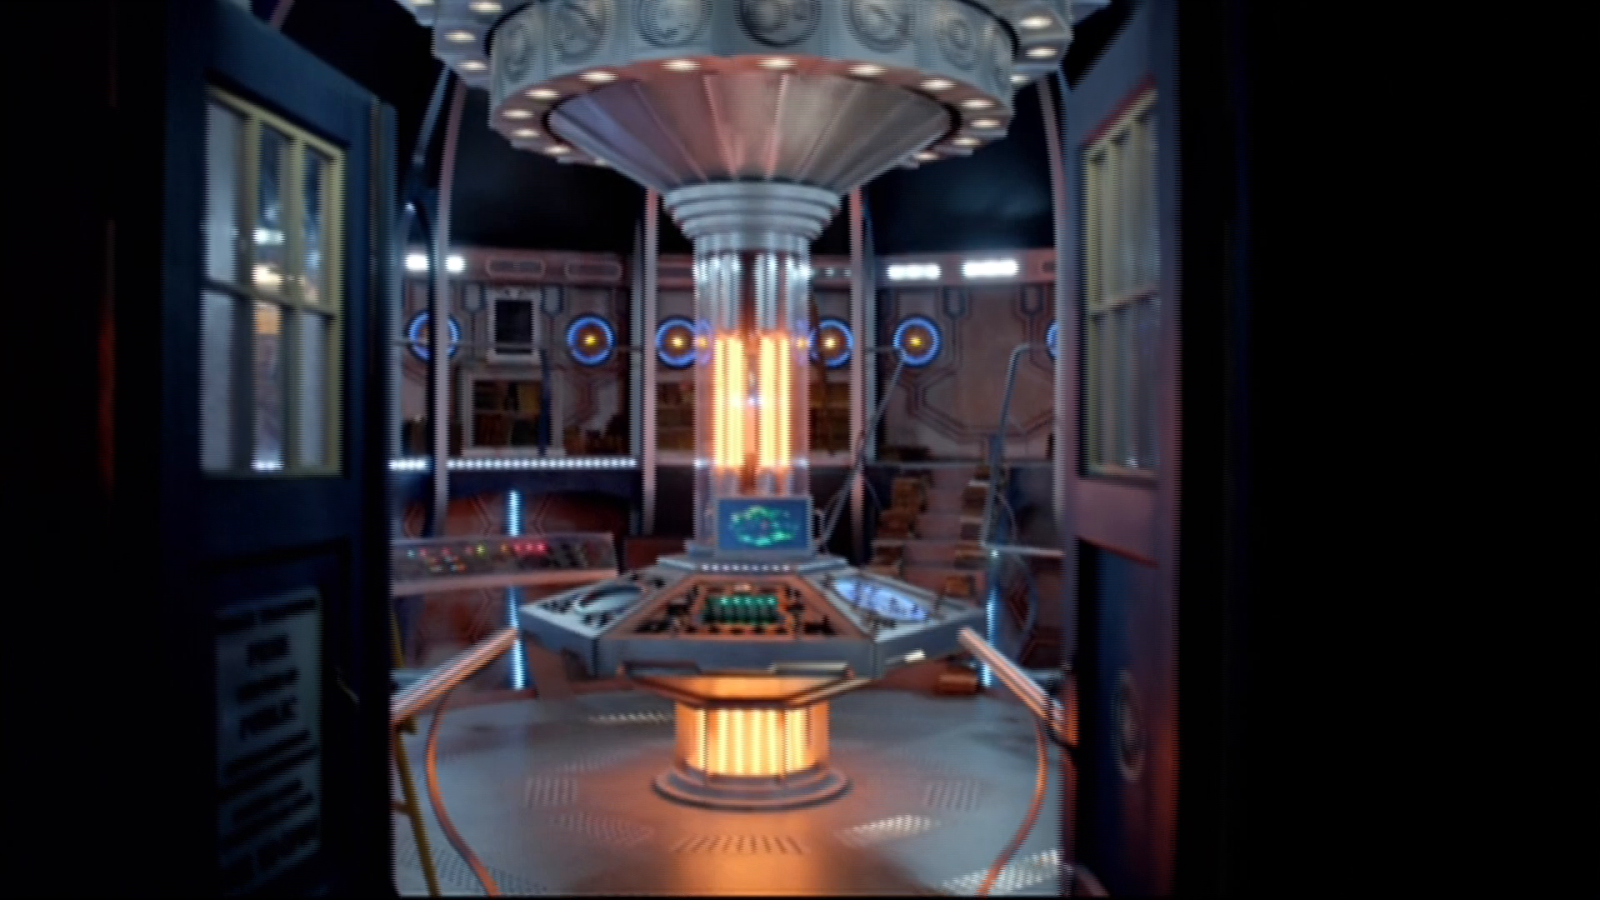 Life Doctor Who Bom Series Trailer Breakdown